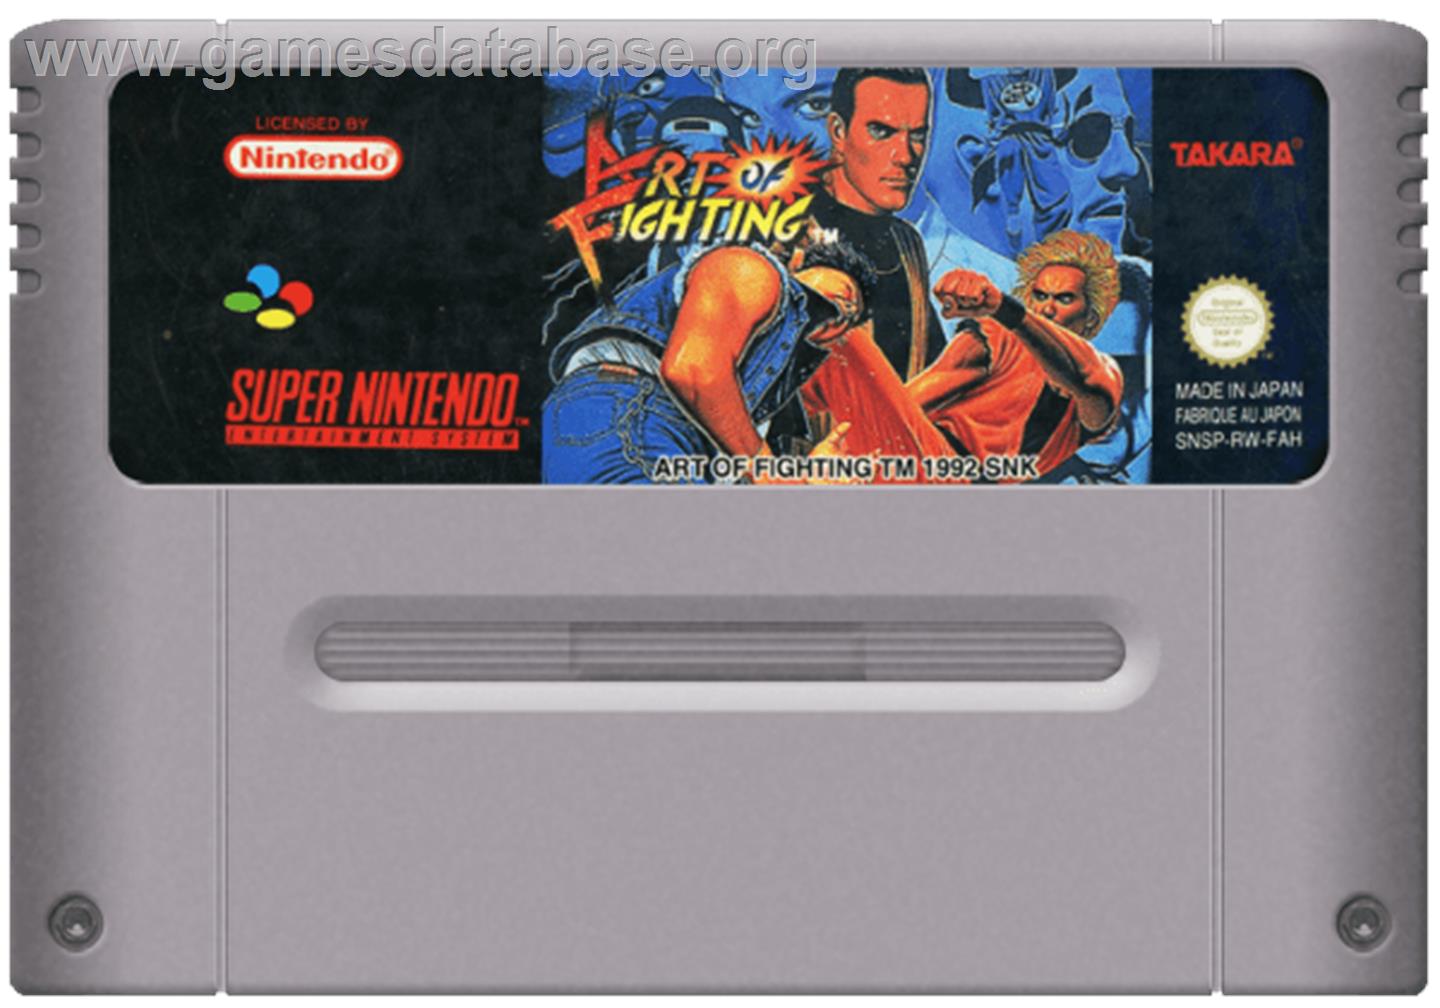 Art of Fighting - Nintendo SNES - Artwork - Cartridge